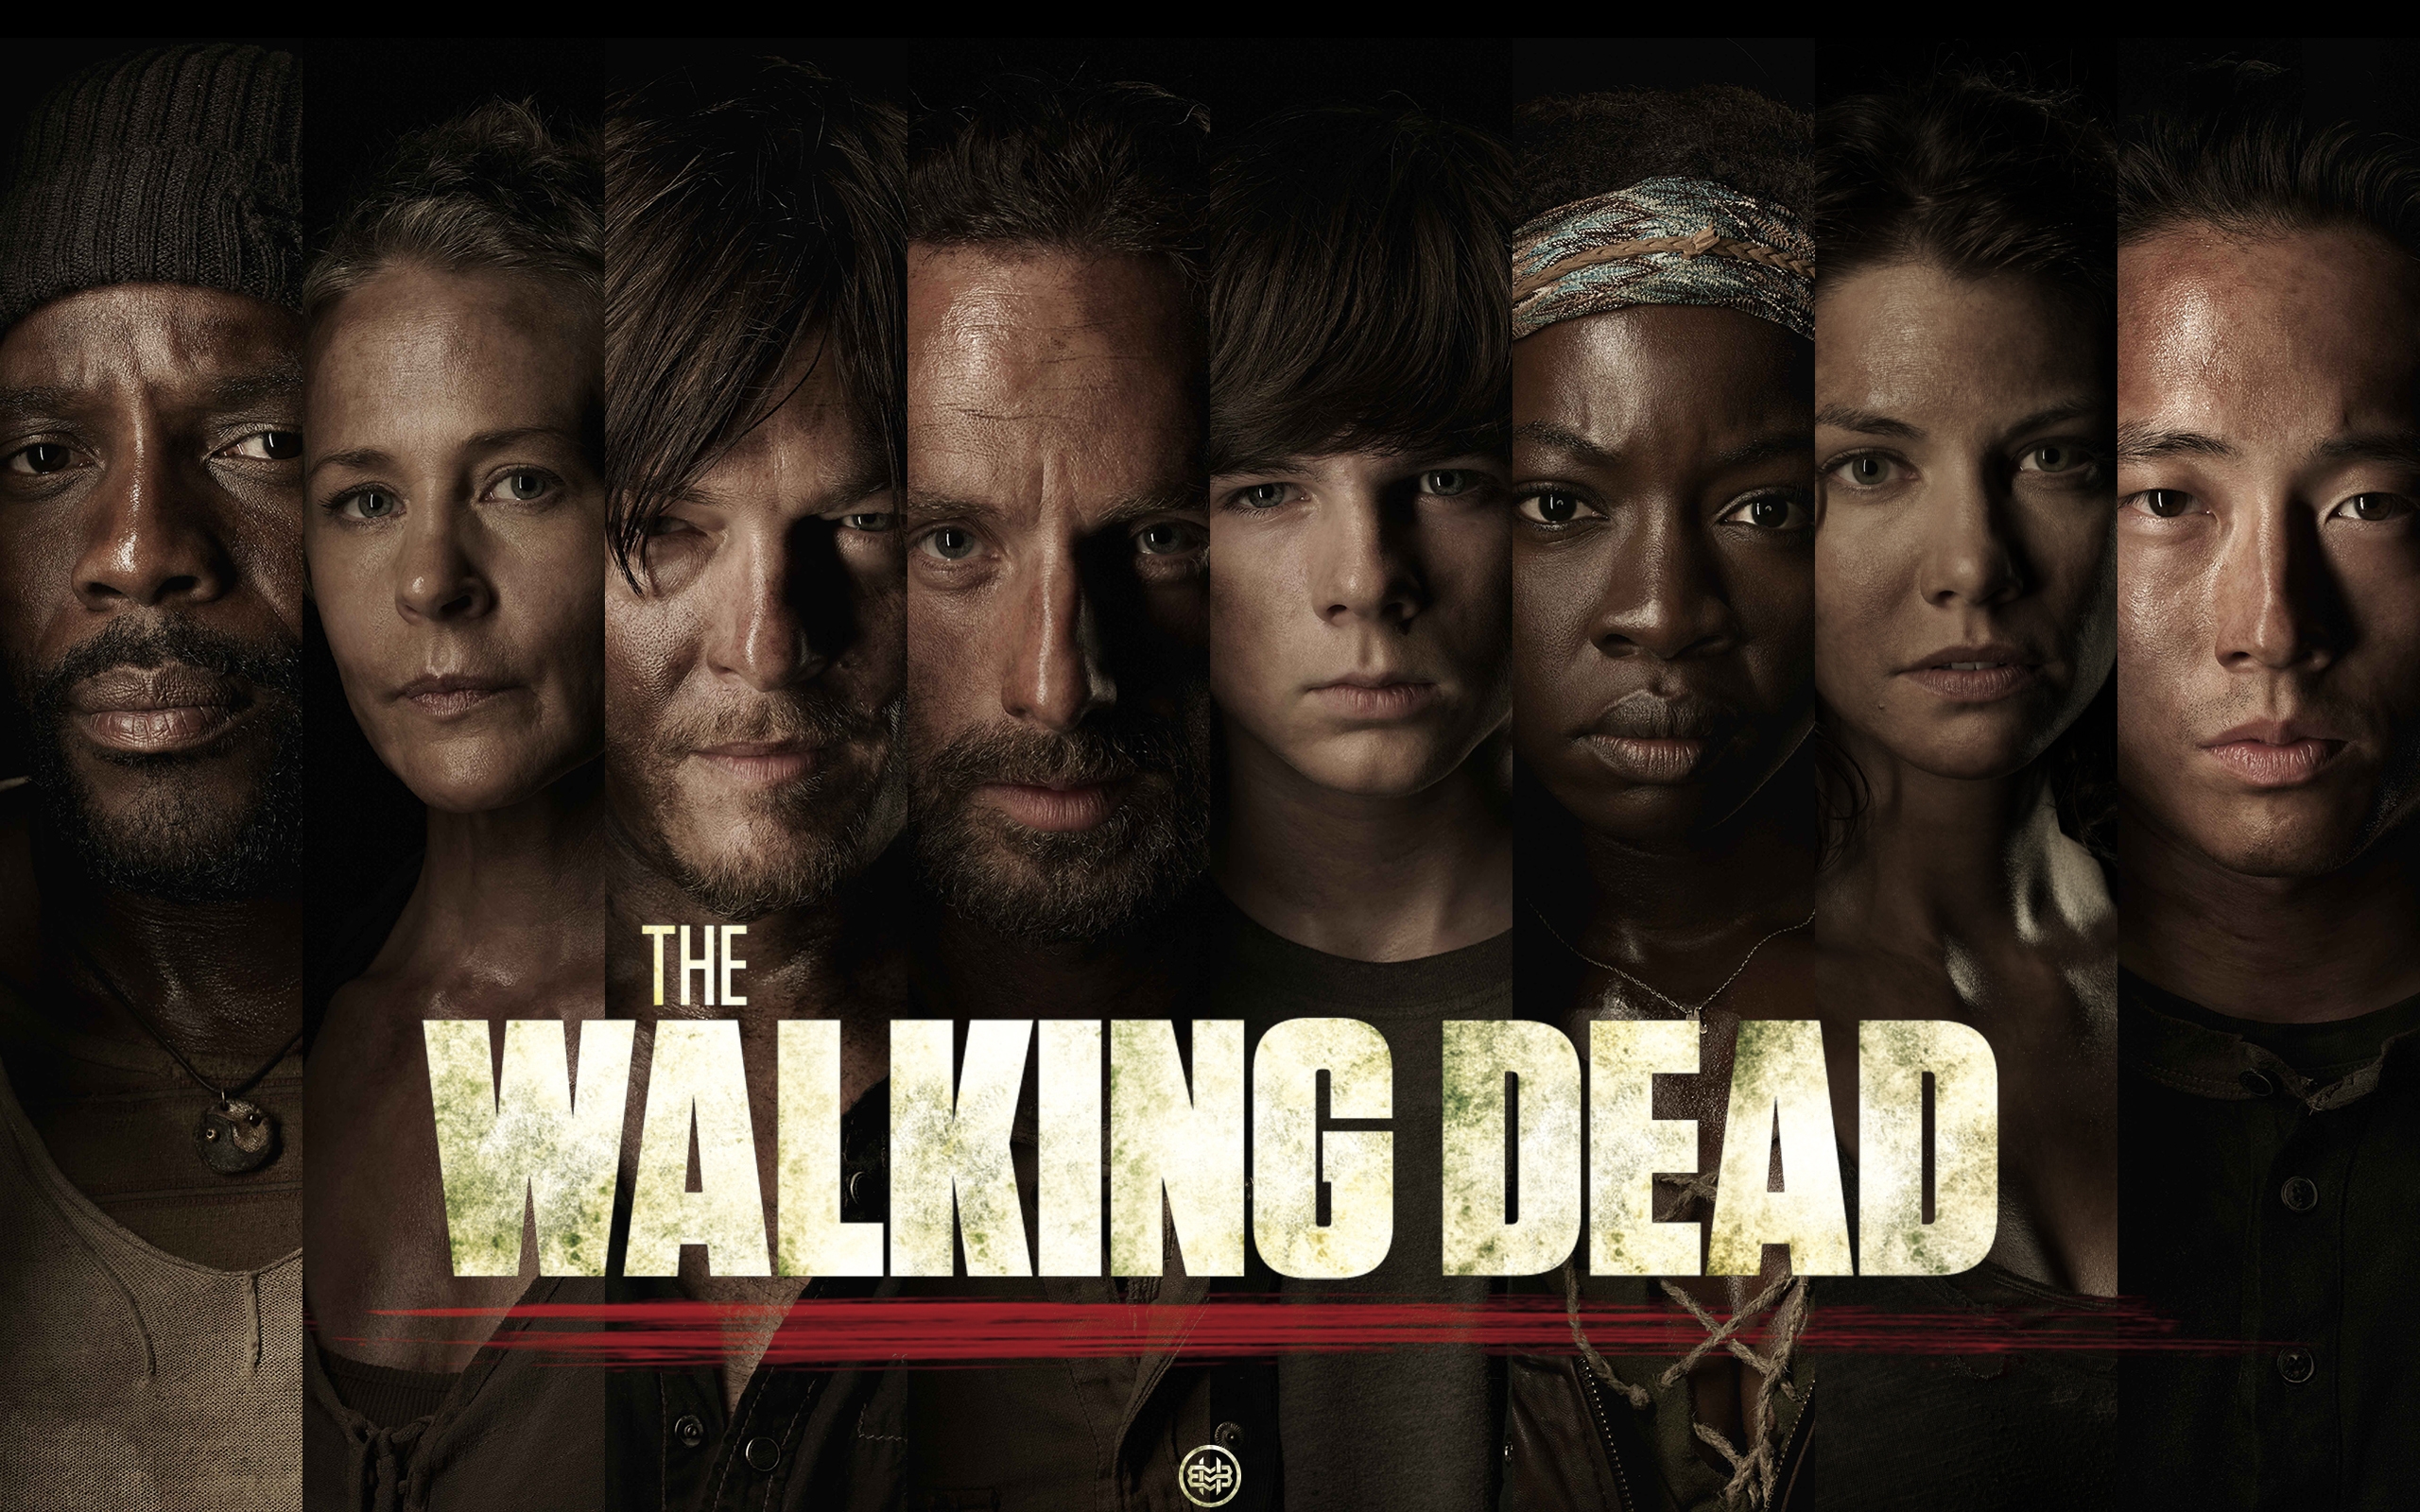 The Walking Dead HD wallpapers free download